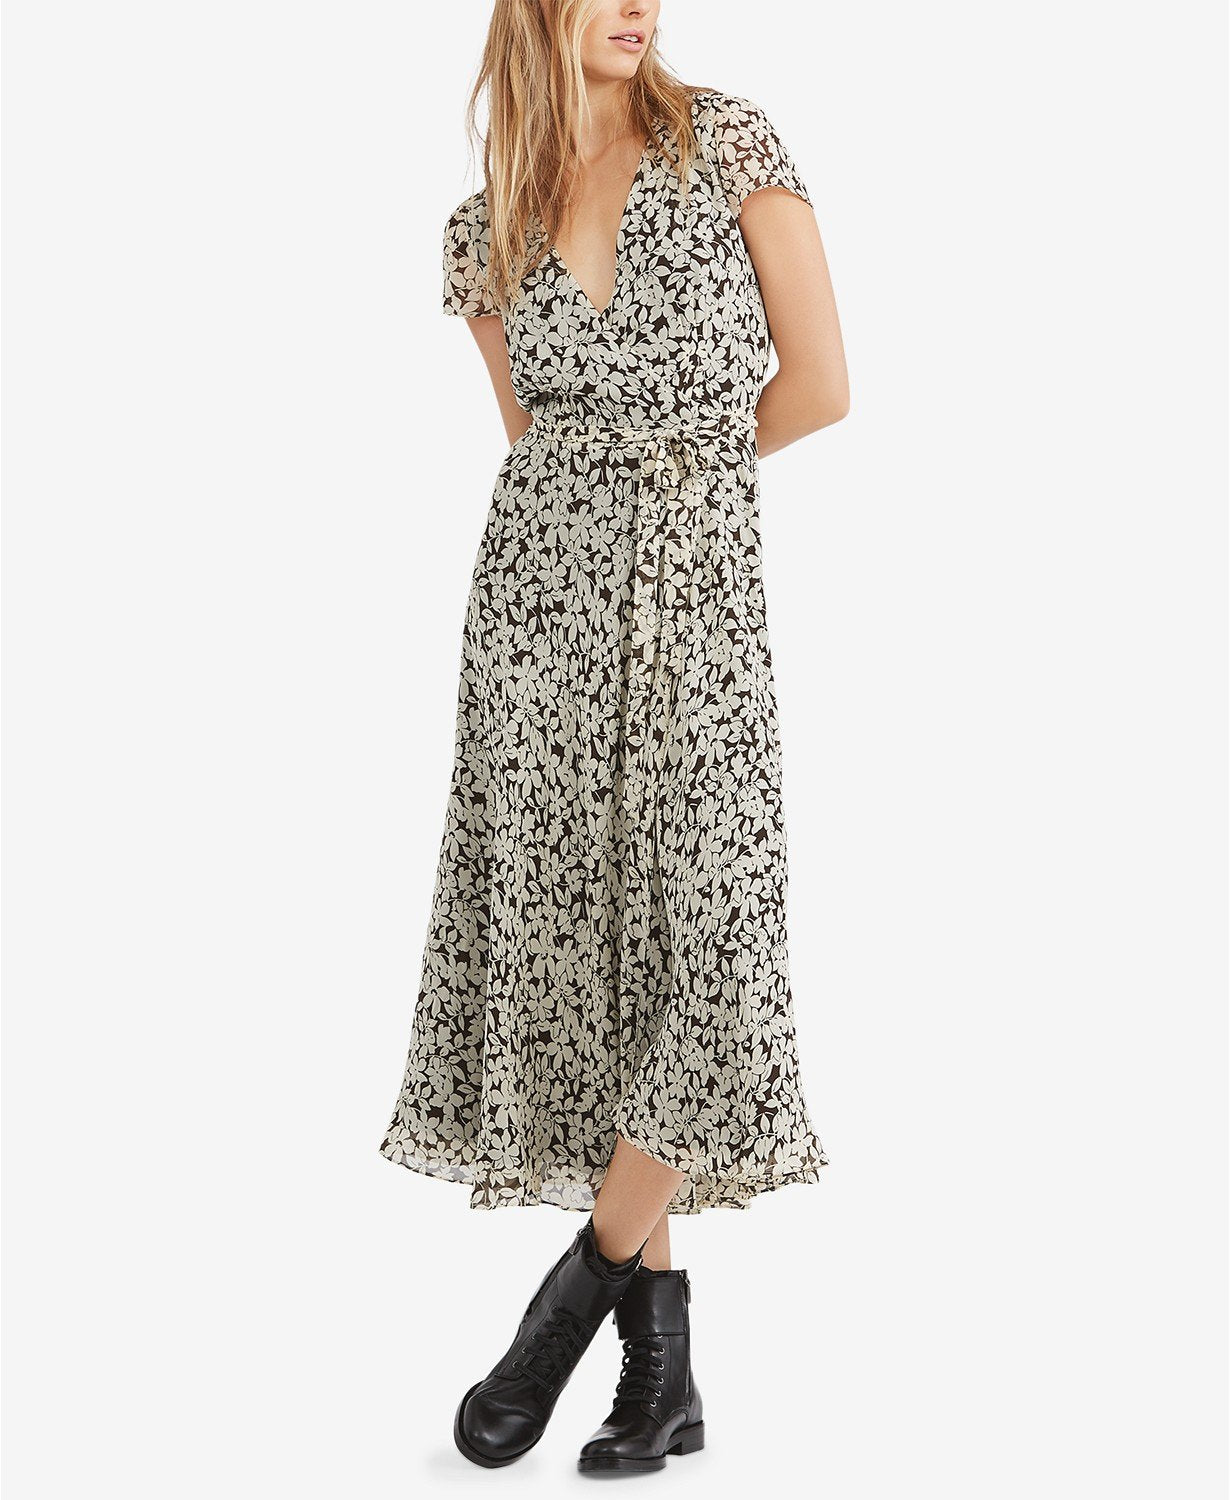 Polo Ralph Lauren Floral-Print Wrap Dress